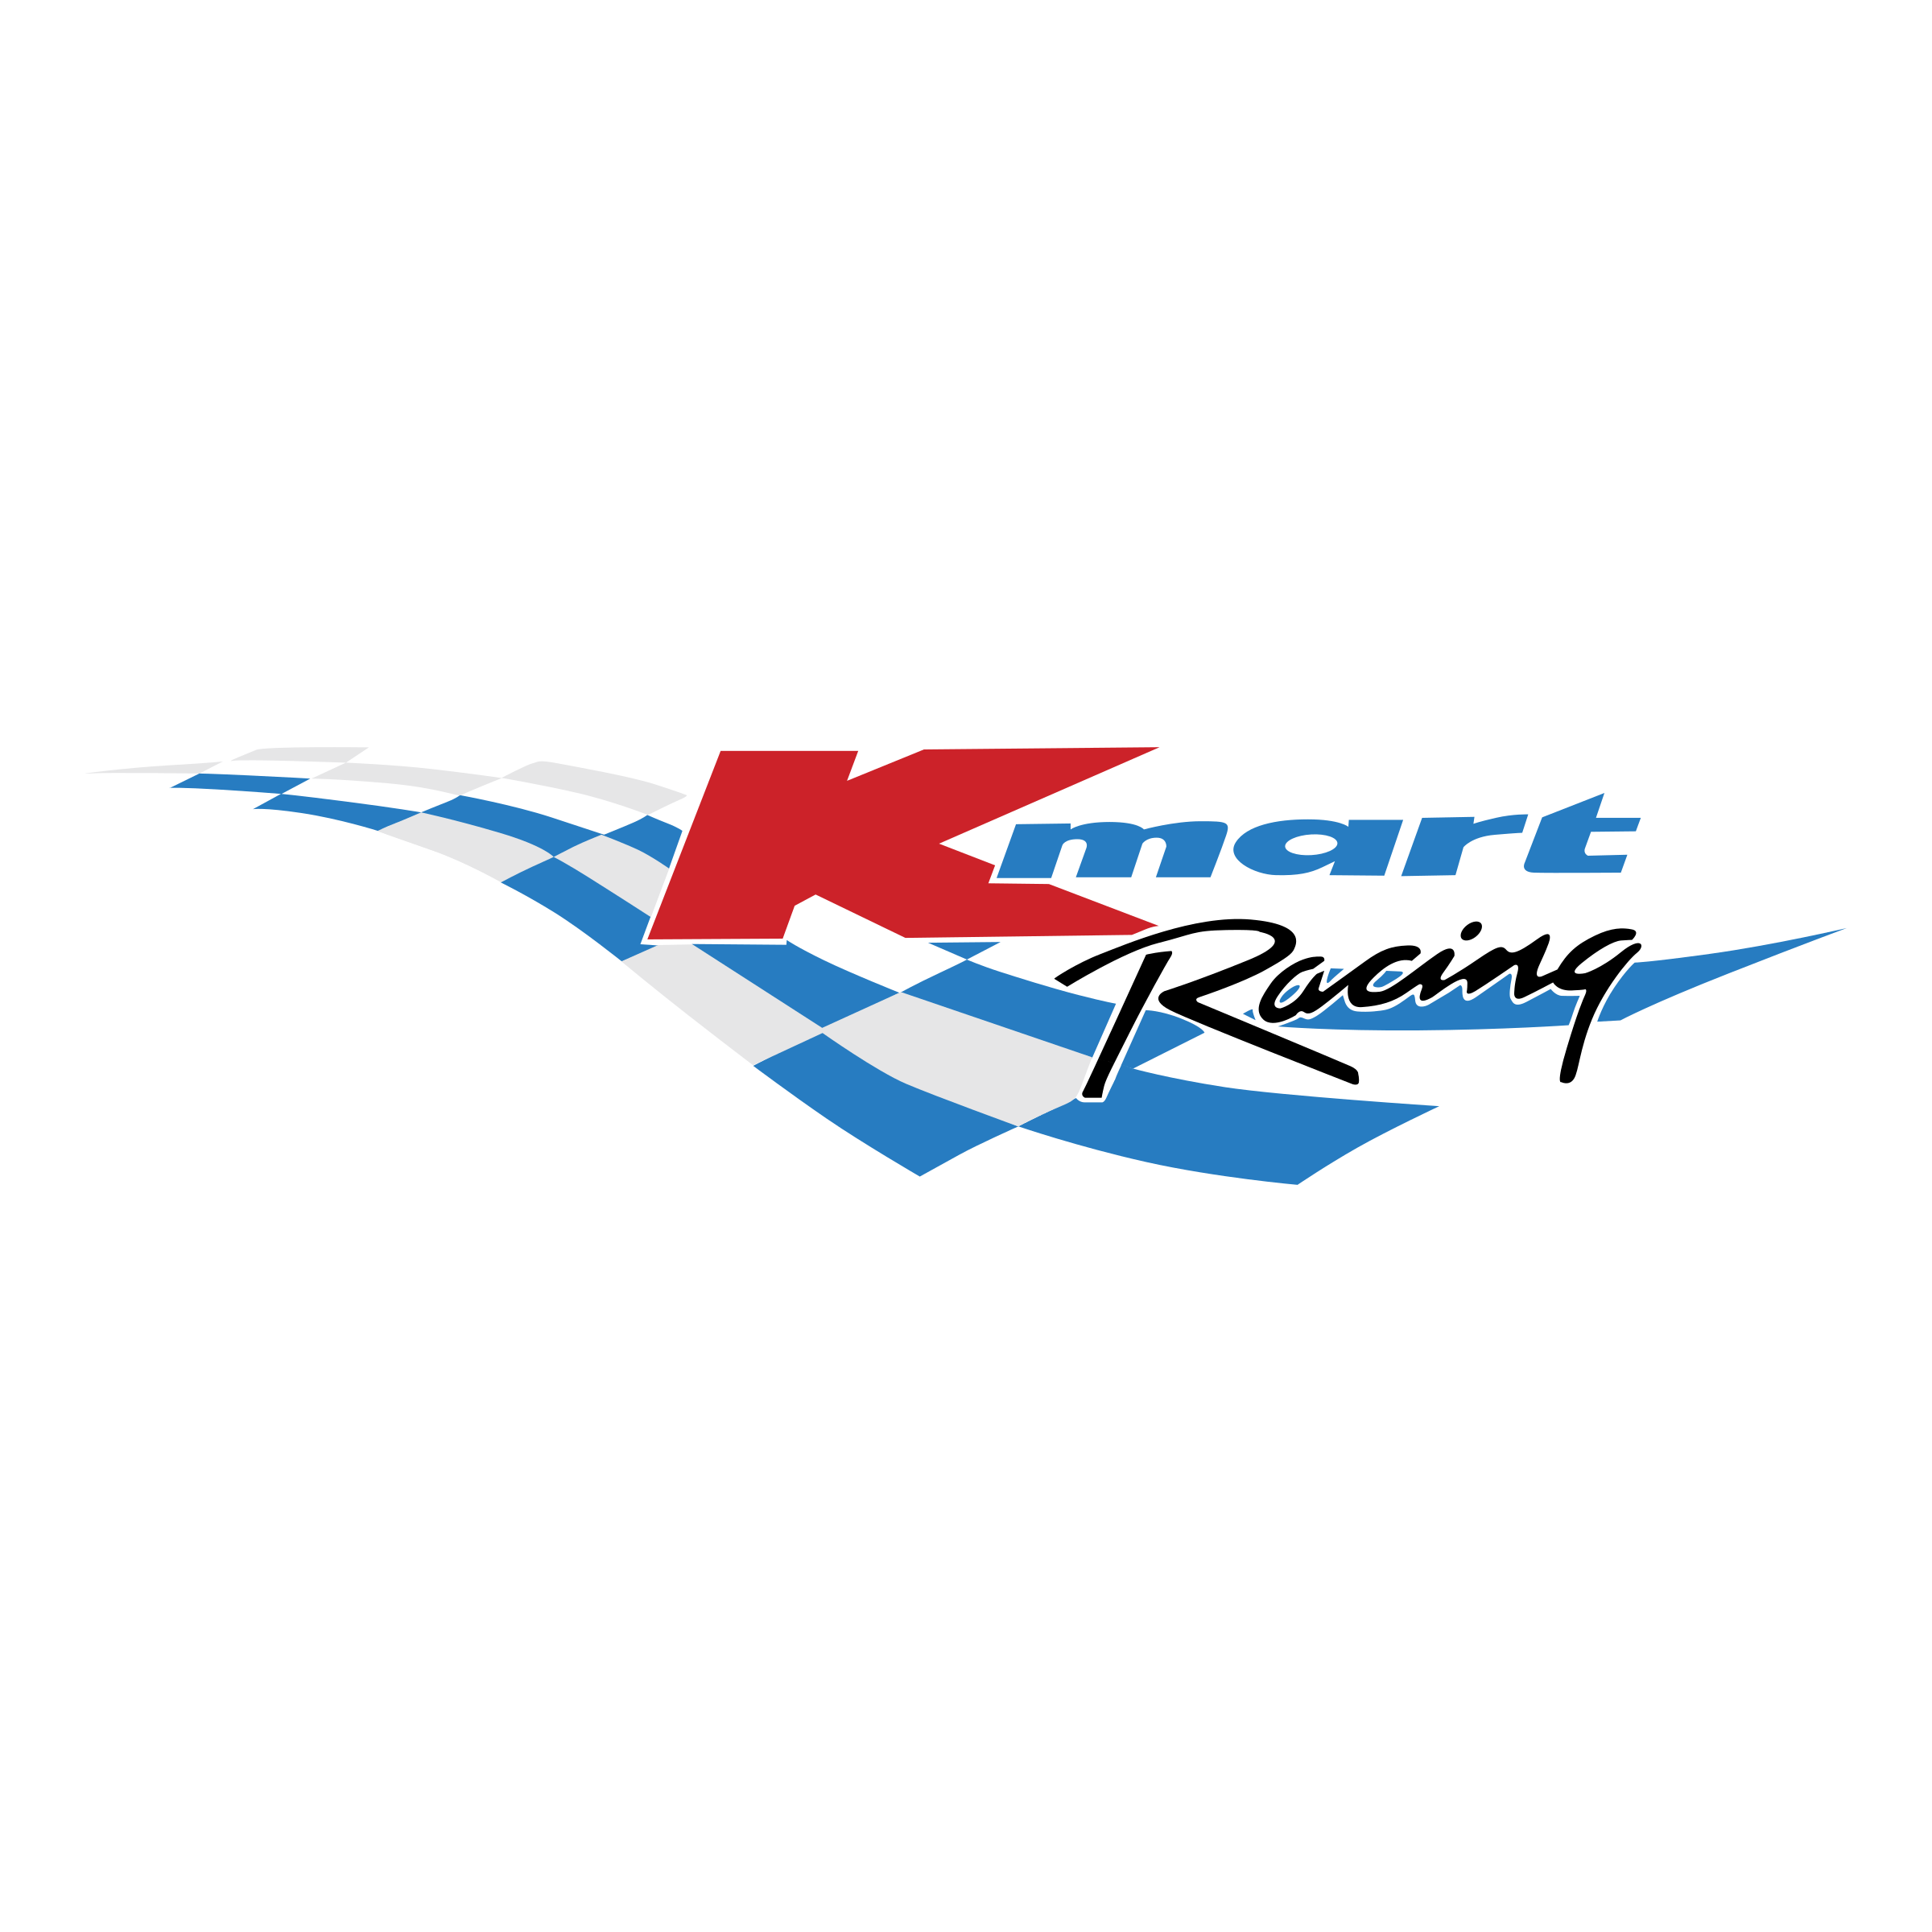 Kmary Logo - Kmart Racing Logo PNG Transparent & SVG Vector - Freebie Supply